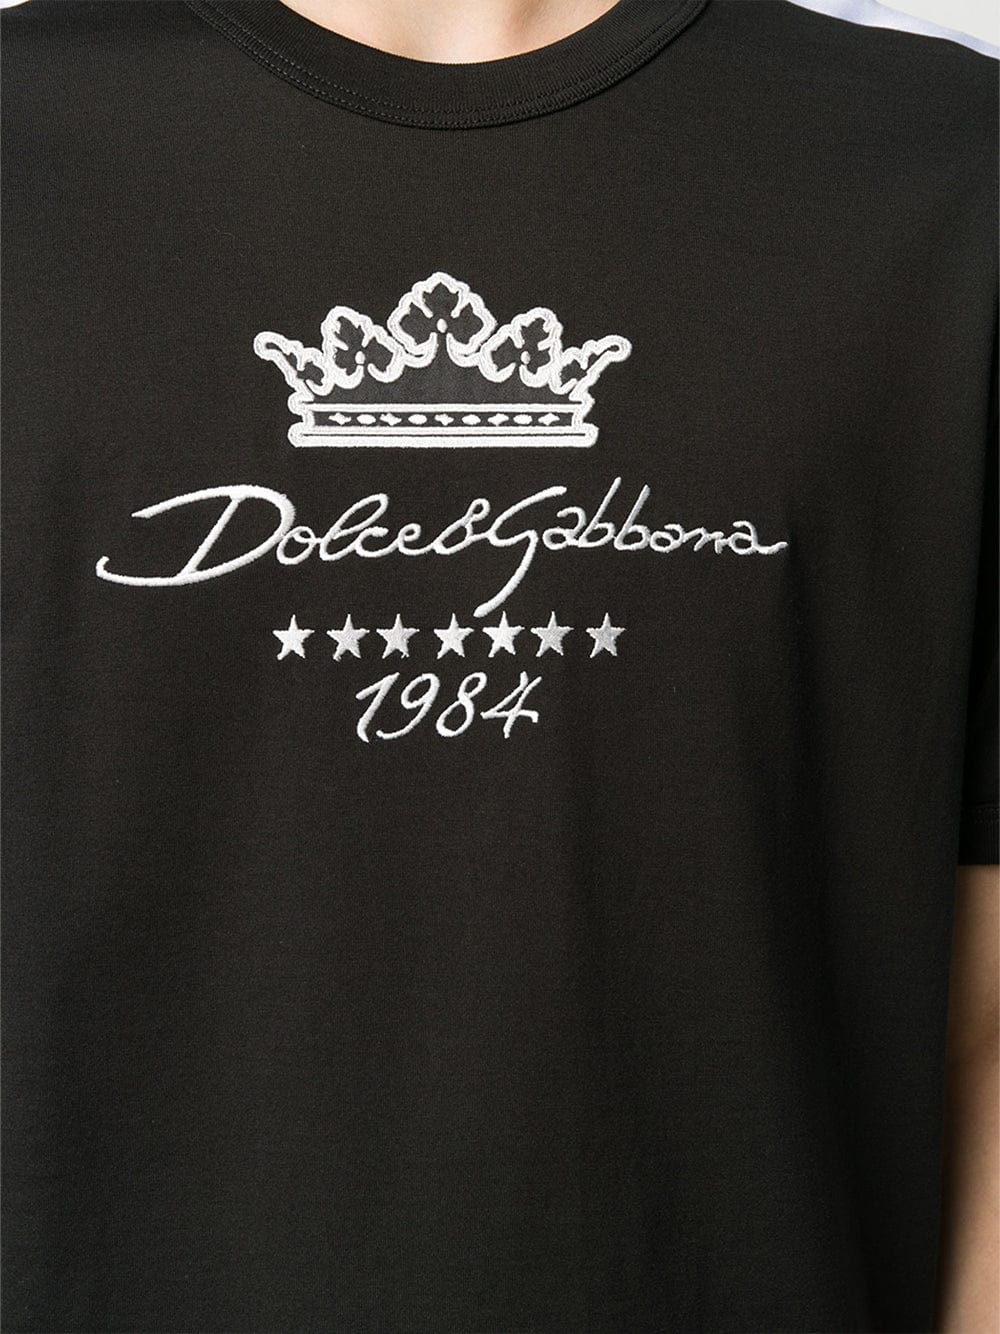 Dolce & Gabbana DG Since 1984 print T-Shirt